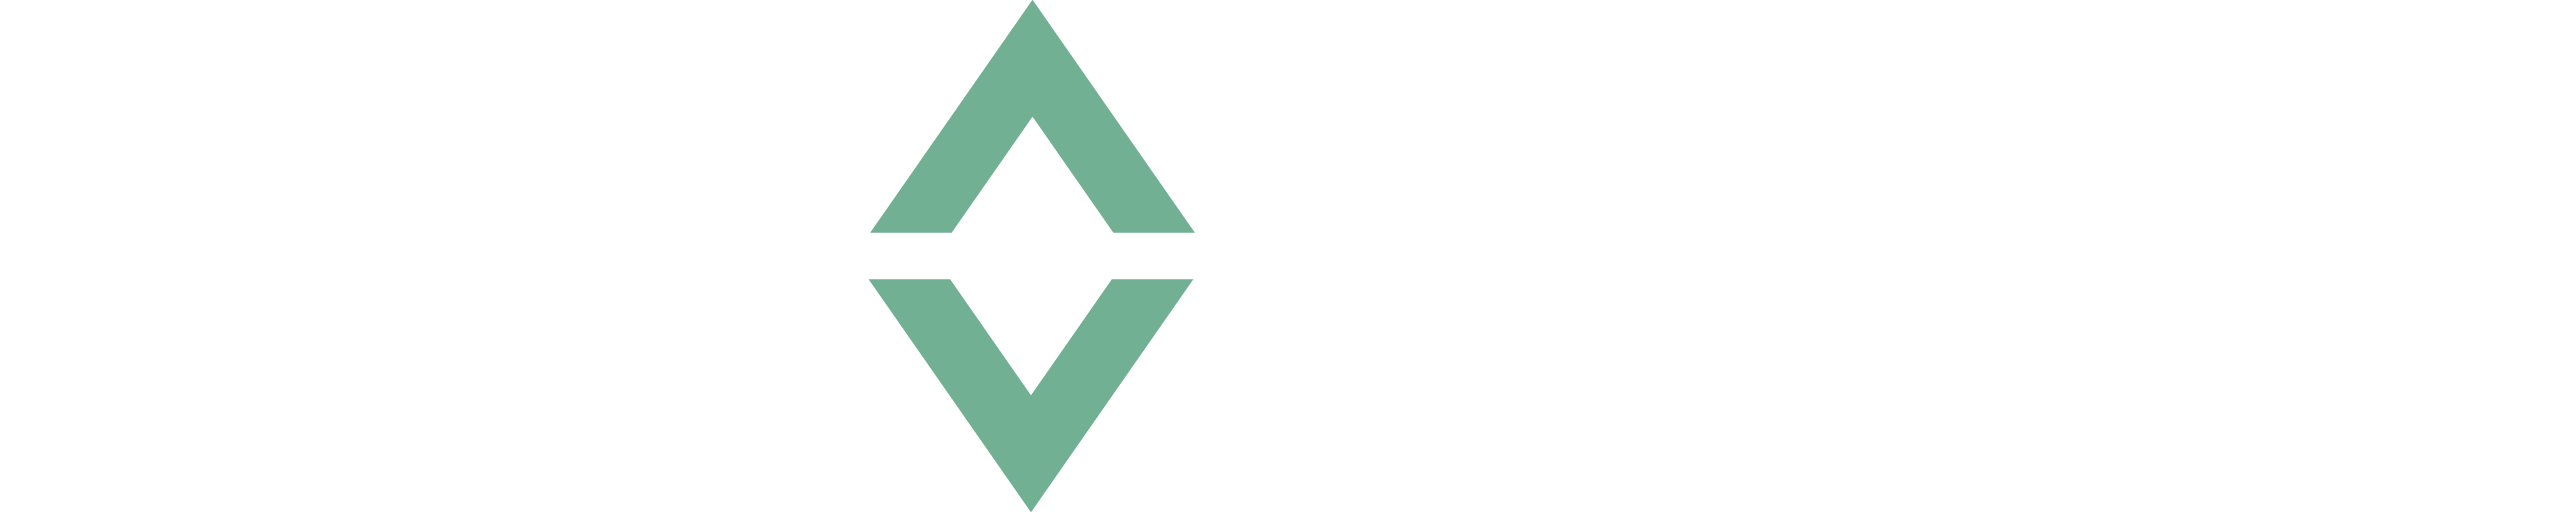 ElevatorBot Logo